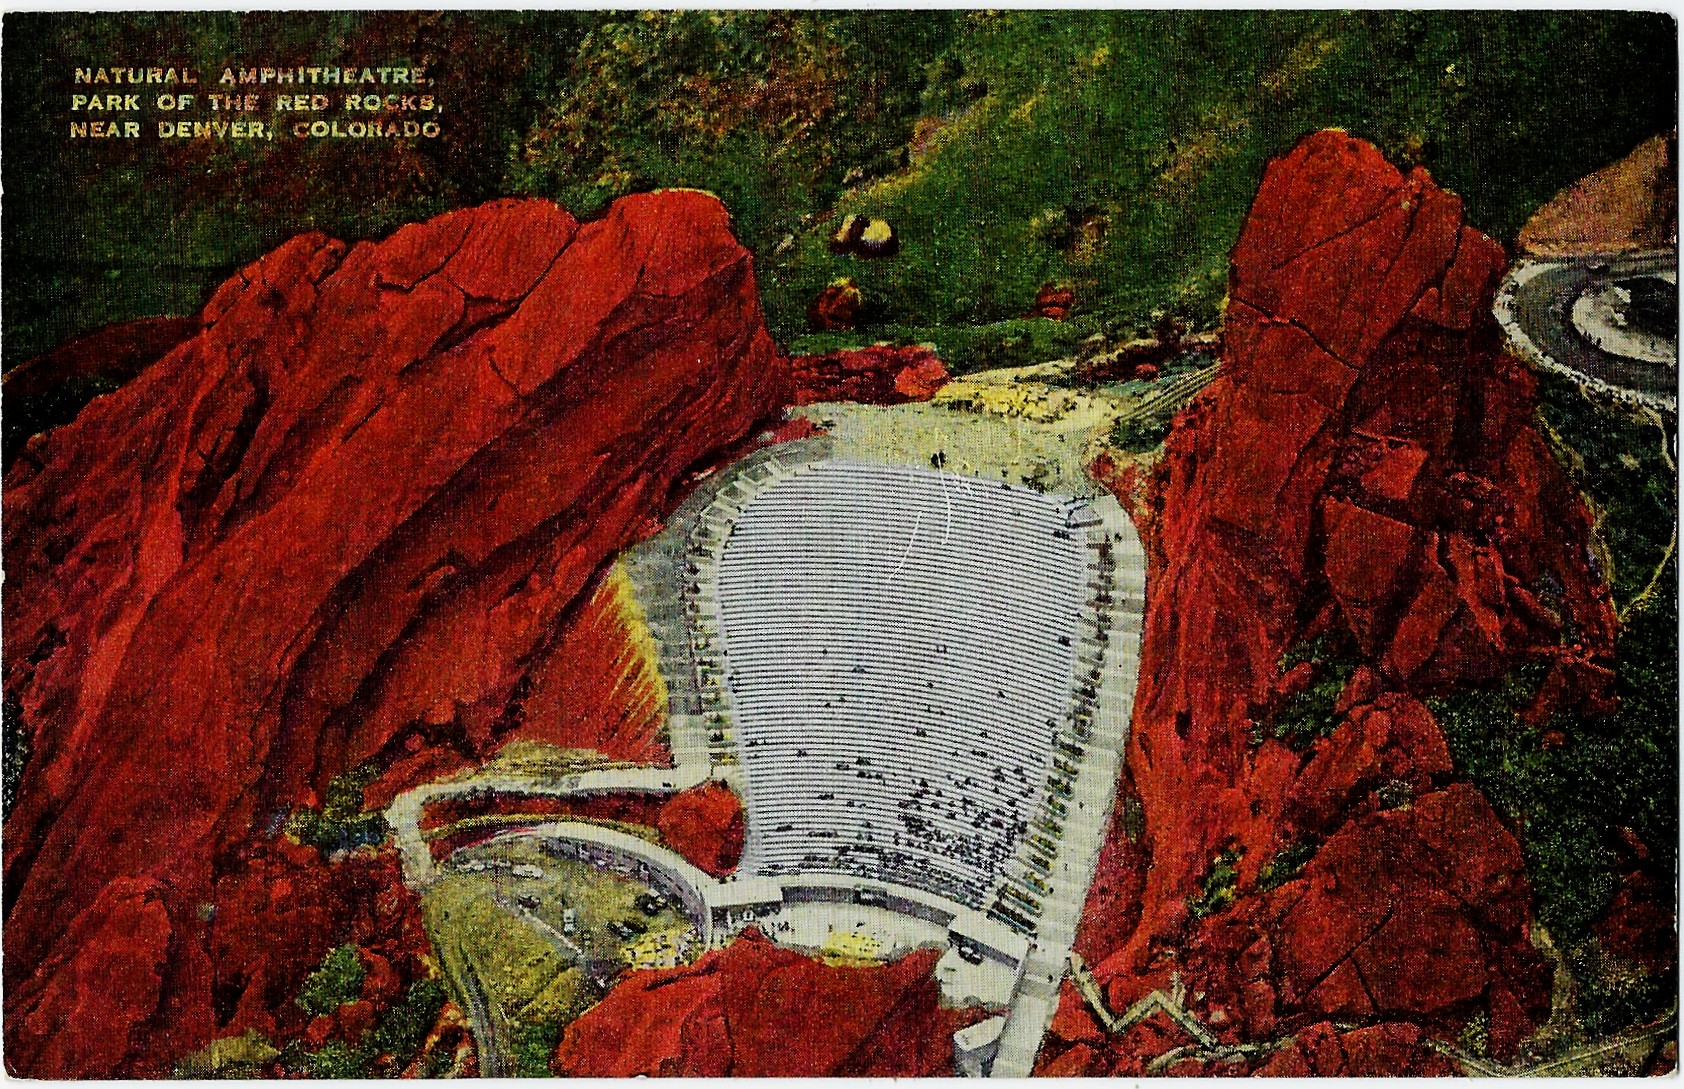 Natural Amphitheatre Park of the Red Rocks near Denver Colorado